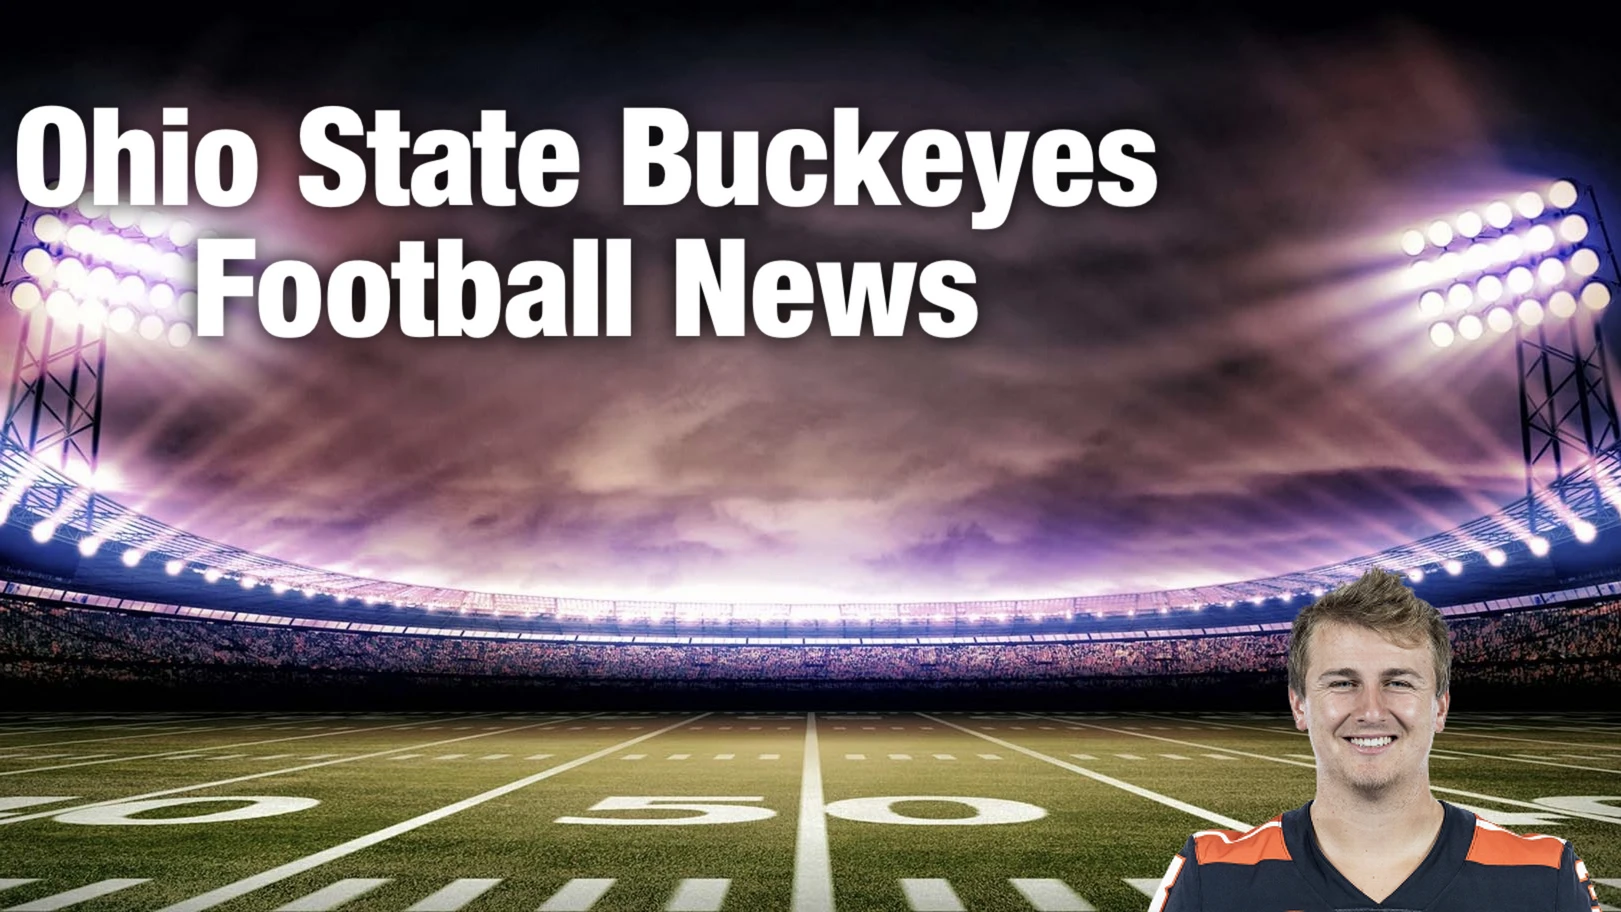 Latest Ohio State Buckeyes college football news